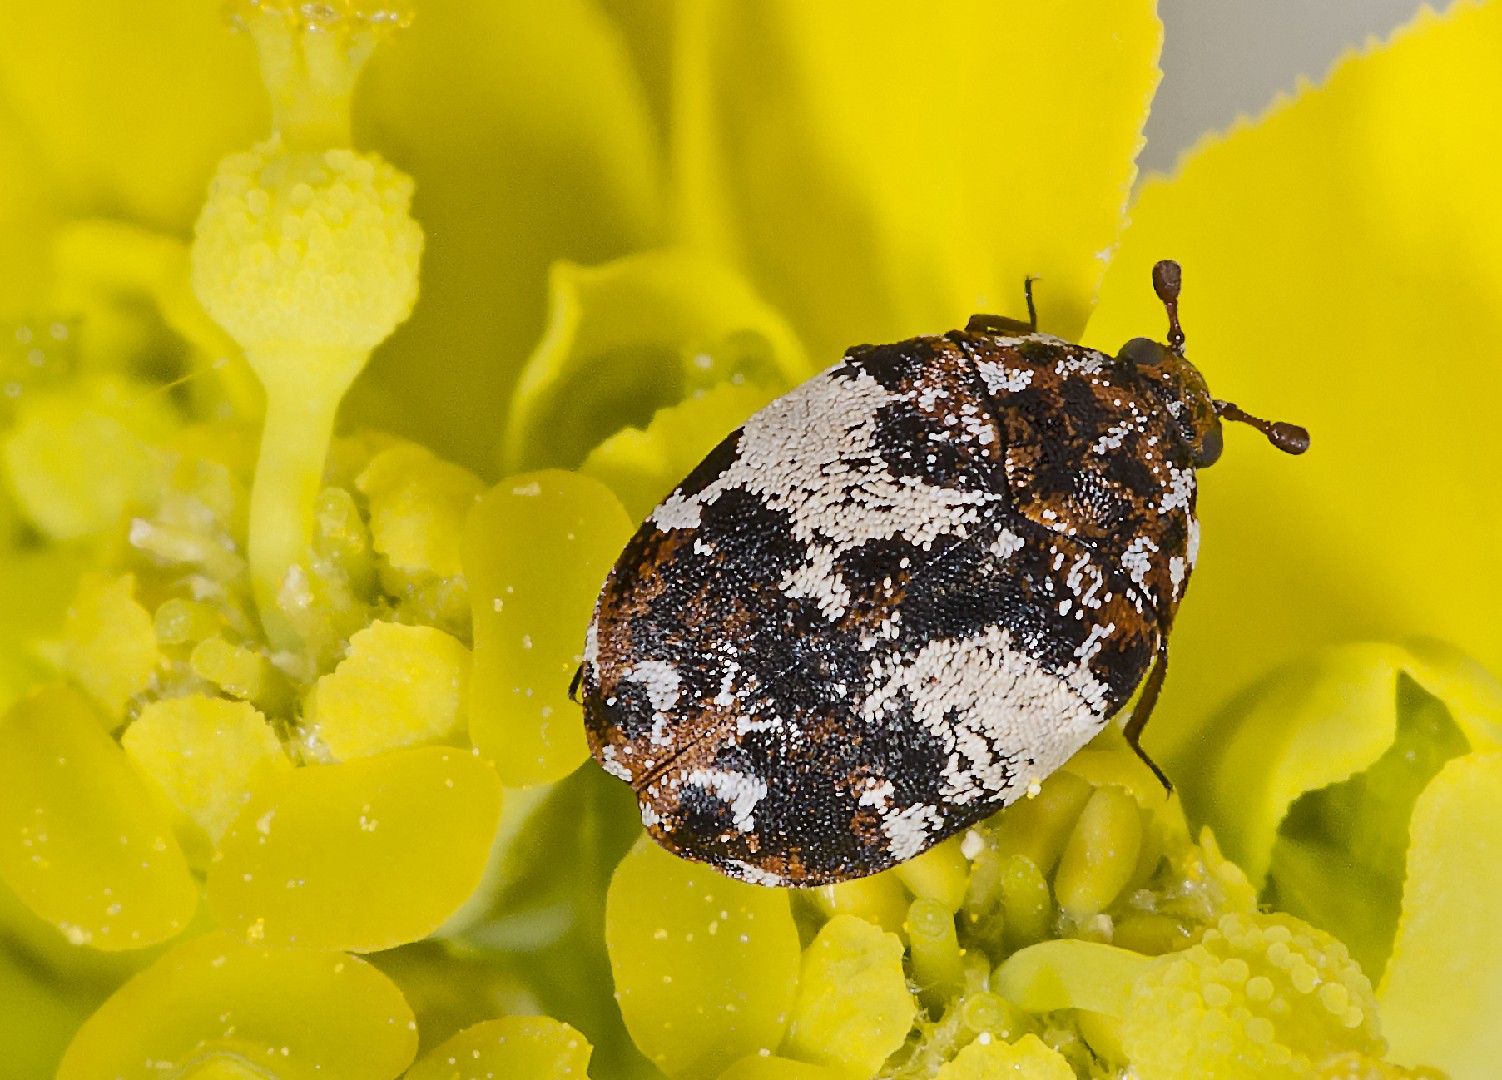 Carpet Beetles - Identification, Threats